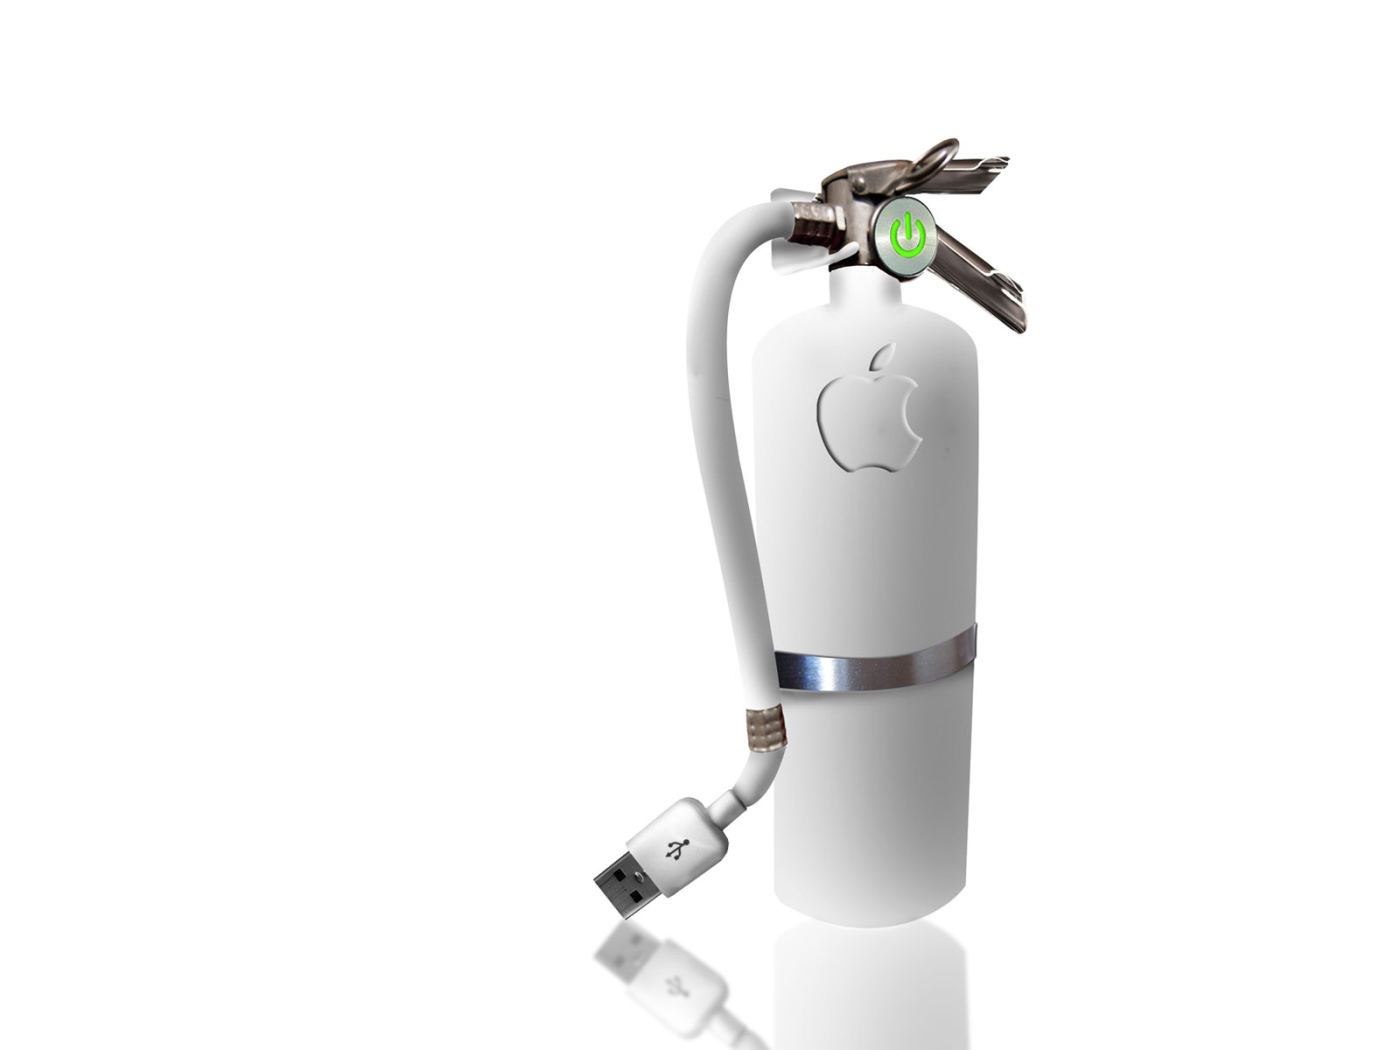 Apple iFire extinguisher